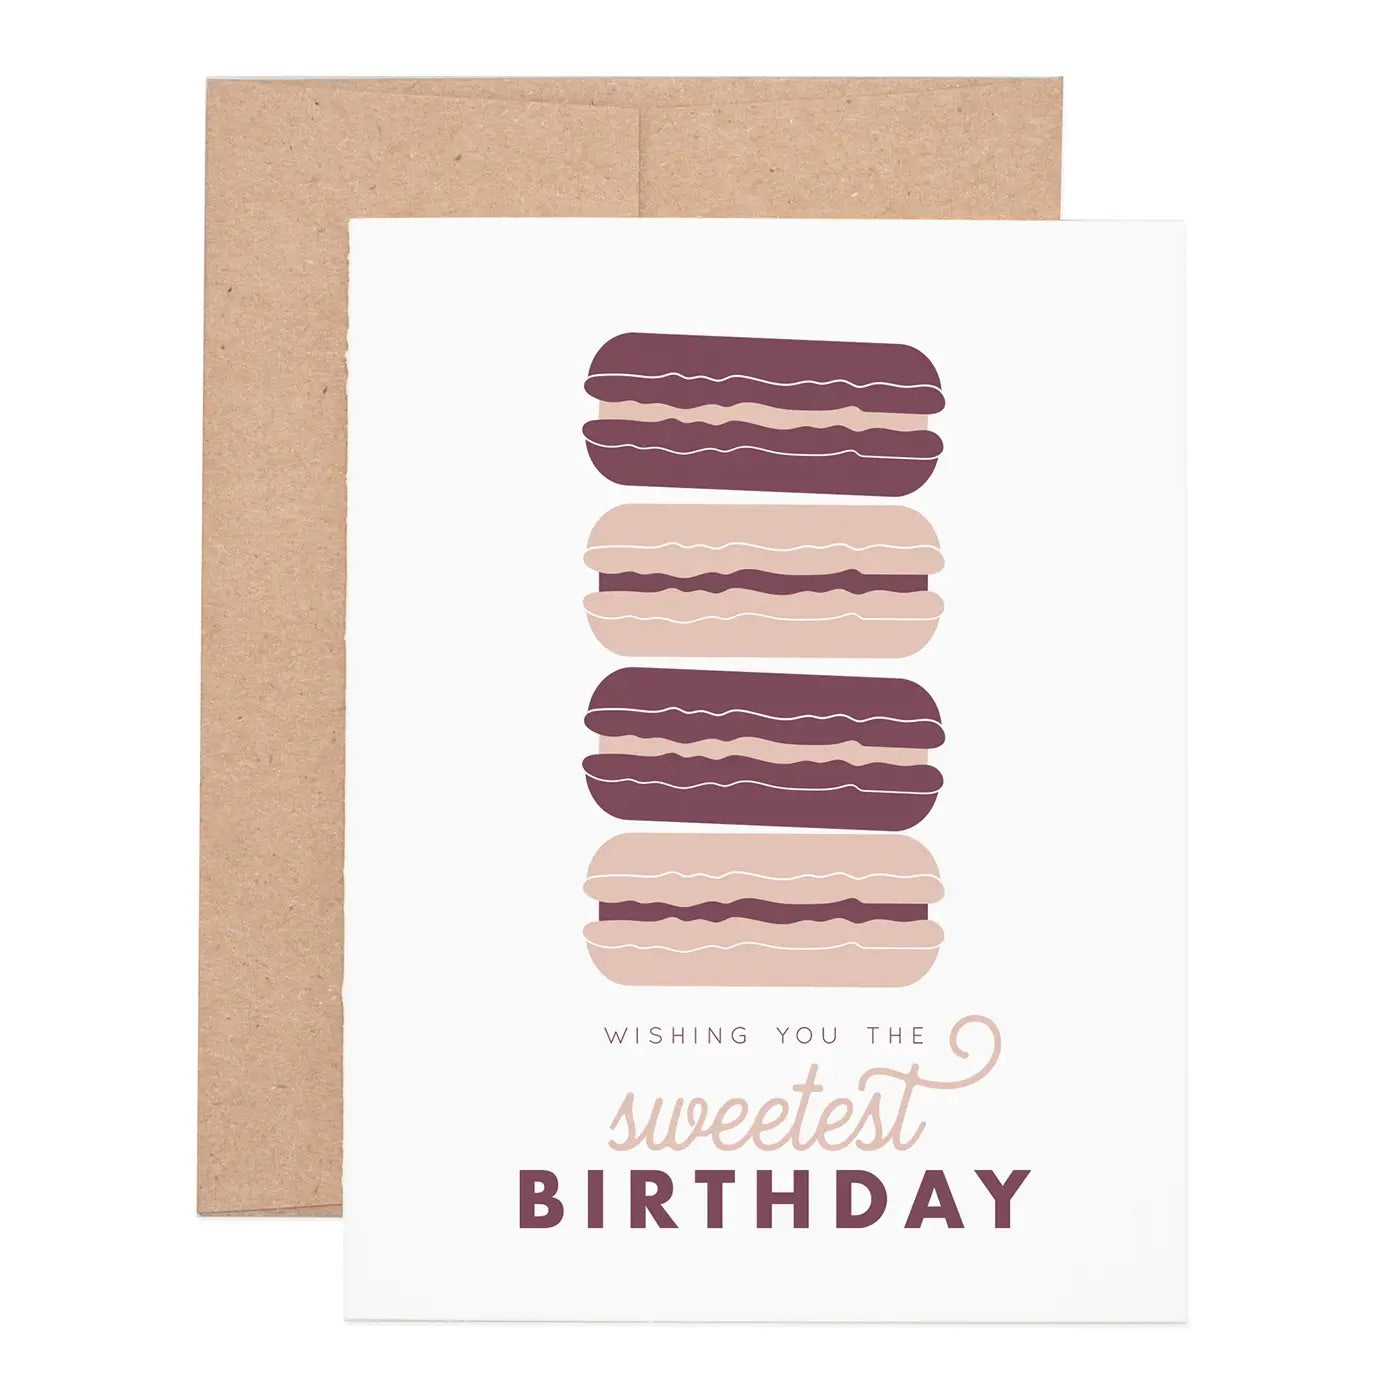 ruff house print shop birthday card